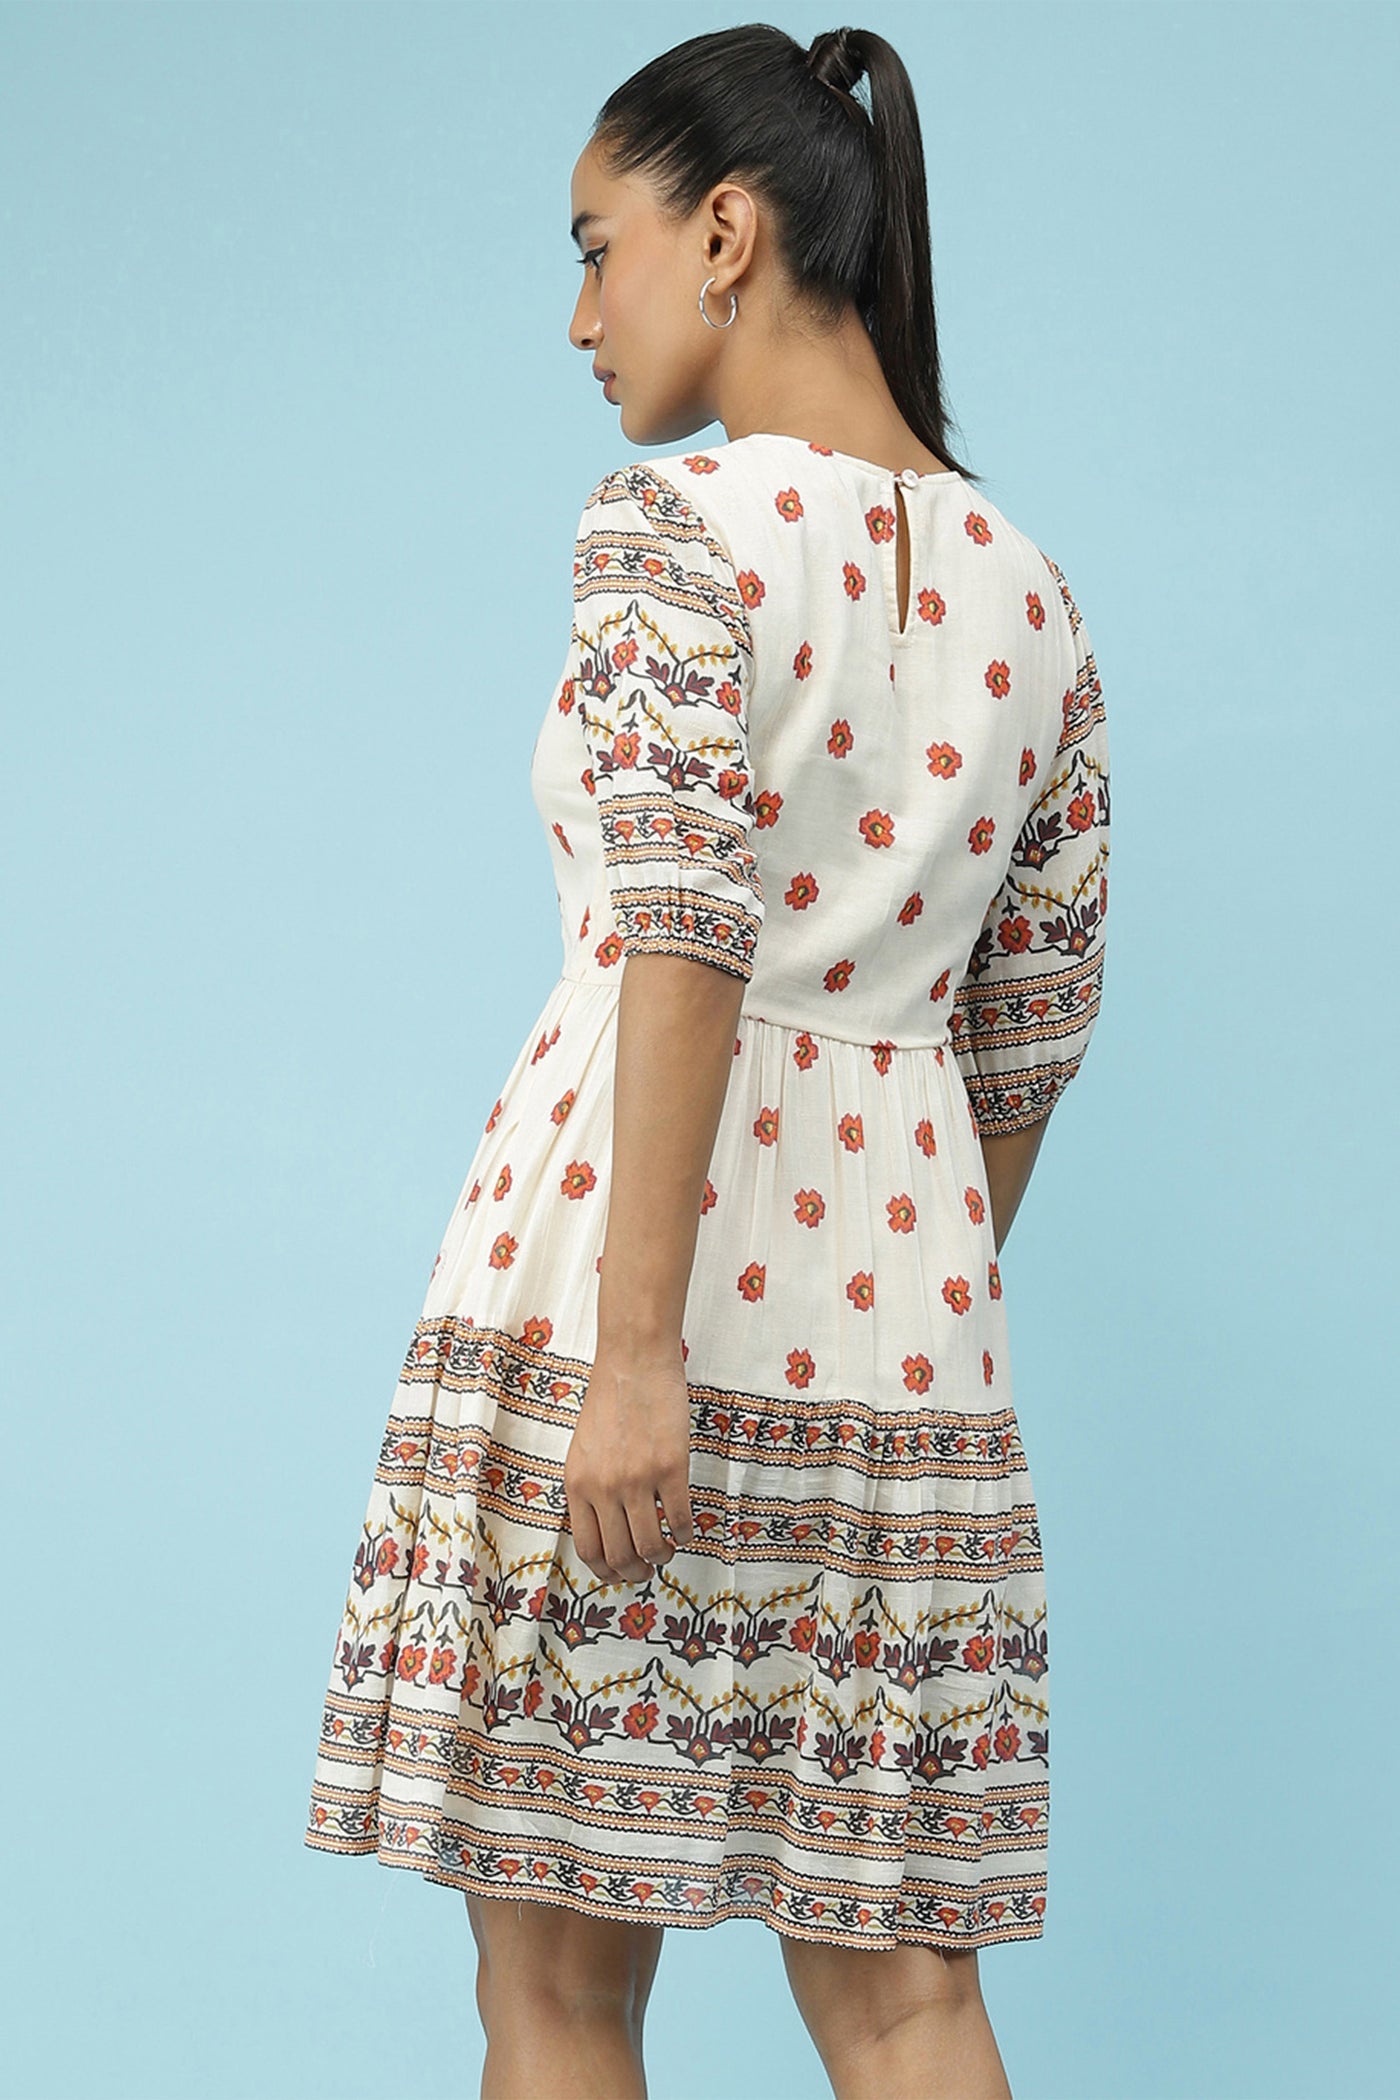 label ritu kumar Ecru Floral Printed Short Dress western  designer wear online shopping melange singapore